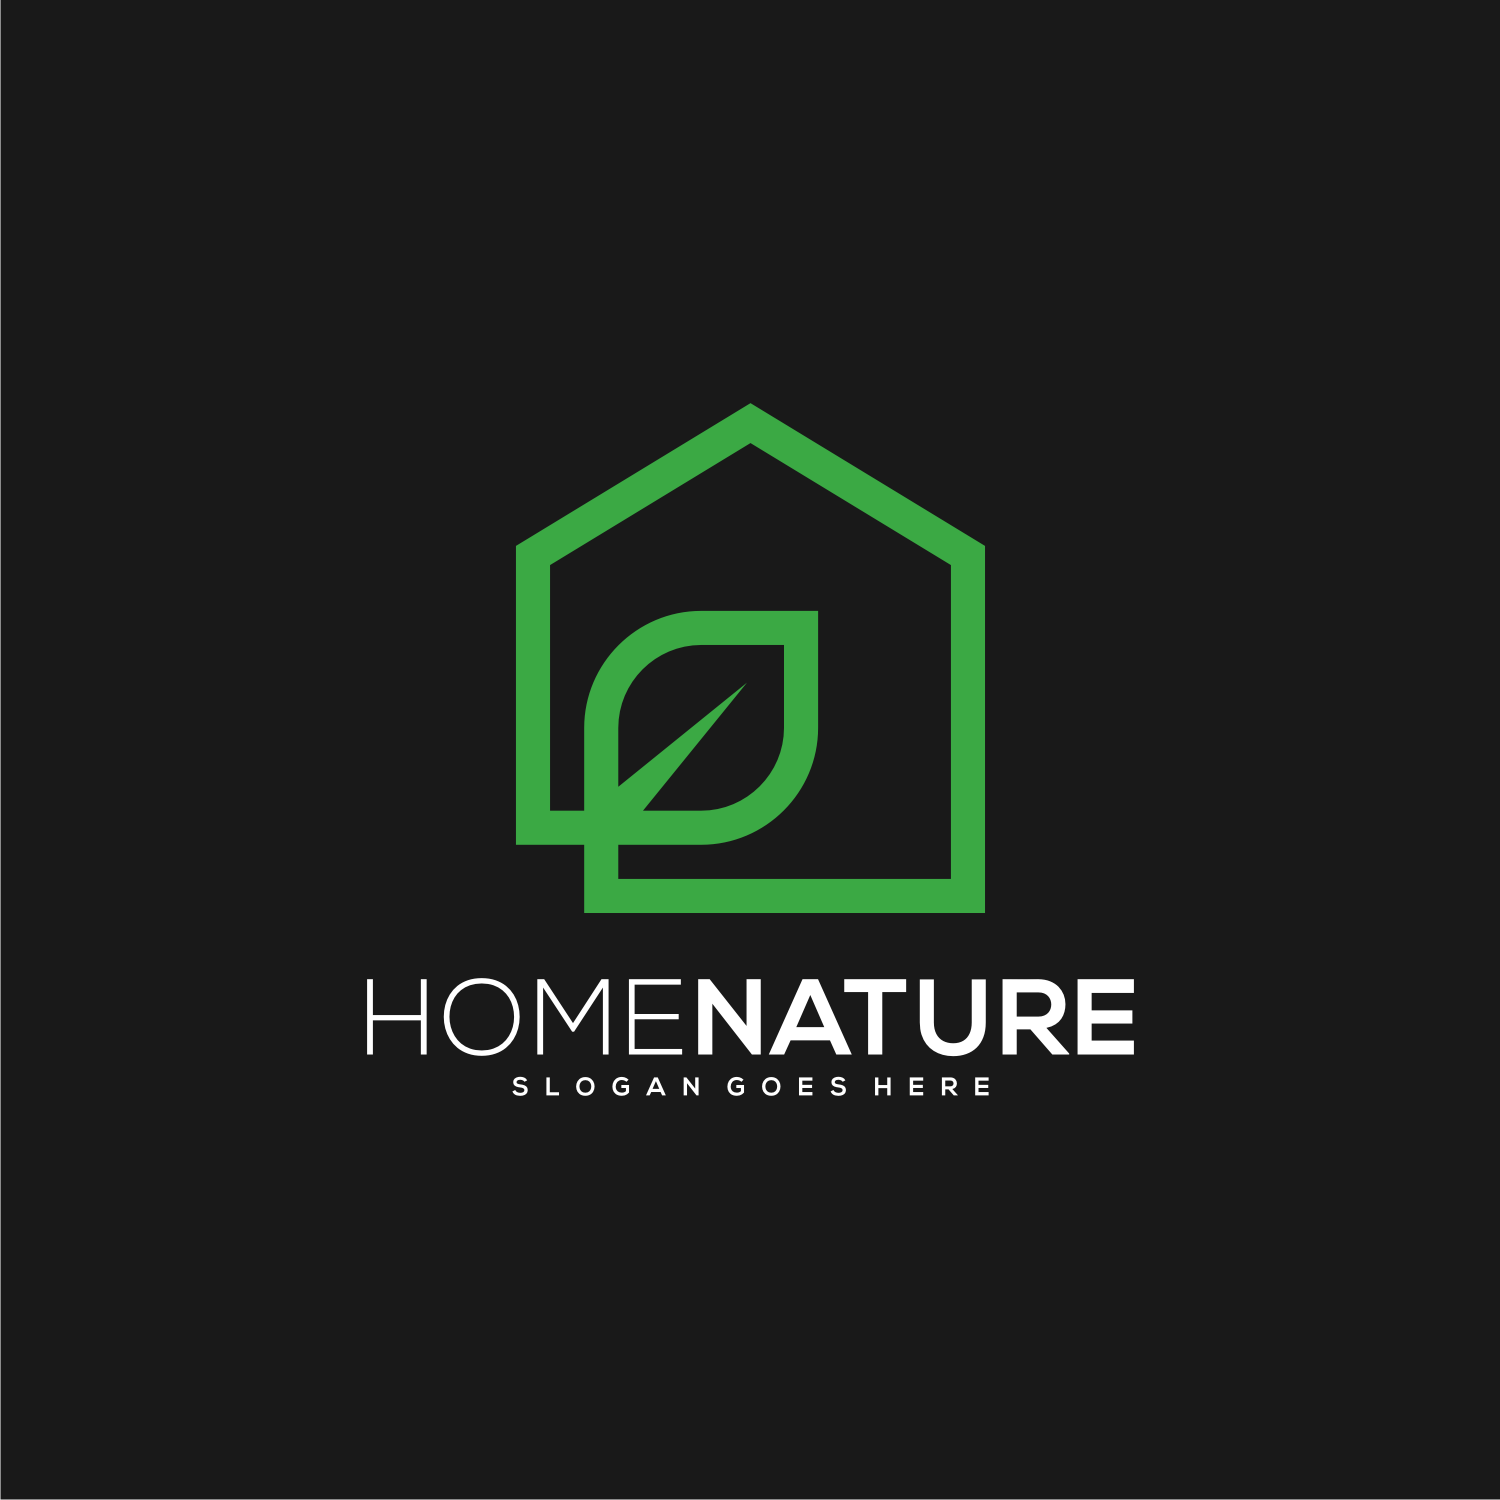 Home Nature Logo Beautiful Vector Design.